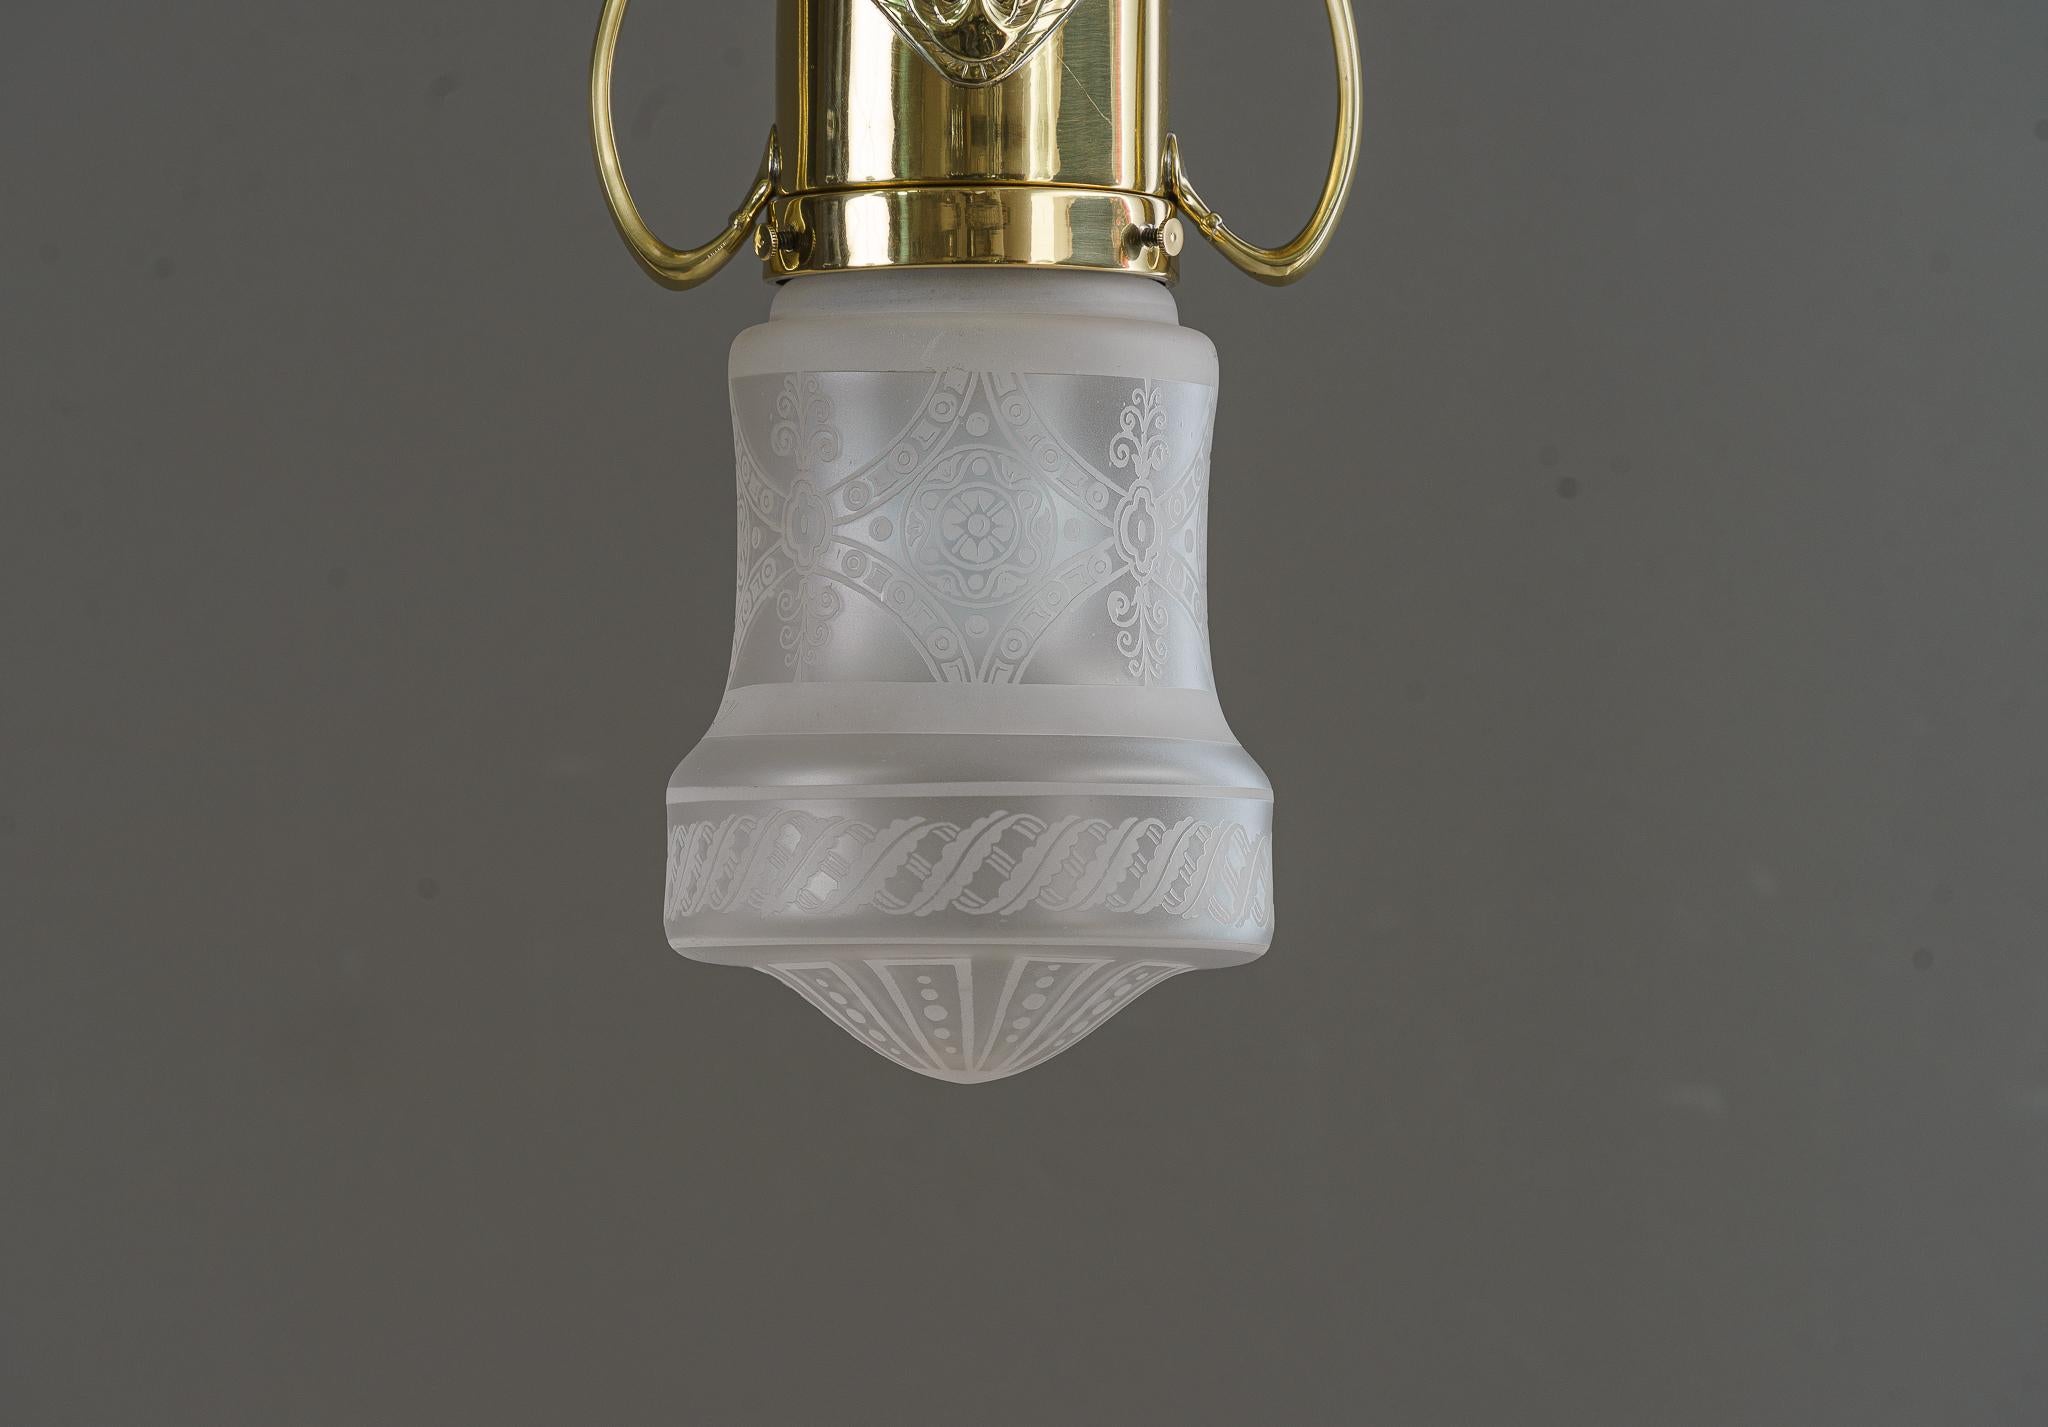 Jugendstil flush mount with original glass shade Vienna around 1910
Brass polished and stove enameled.
Original glass shade.